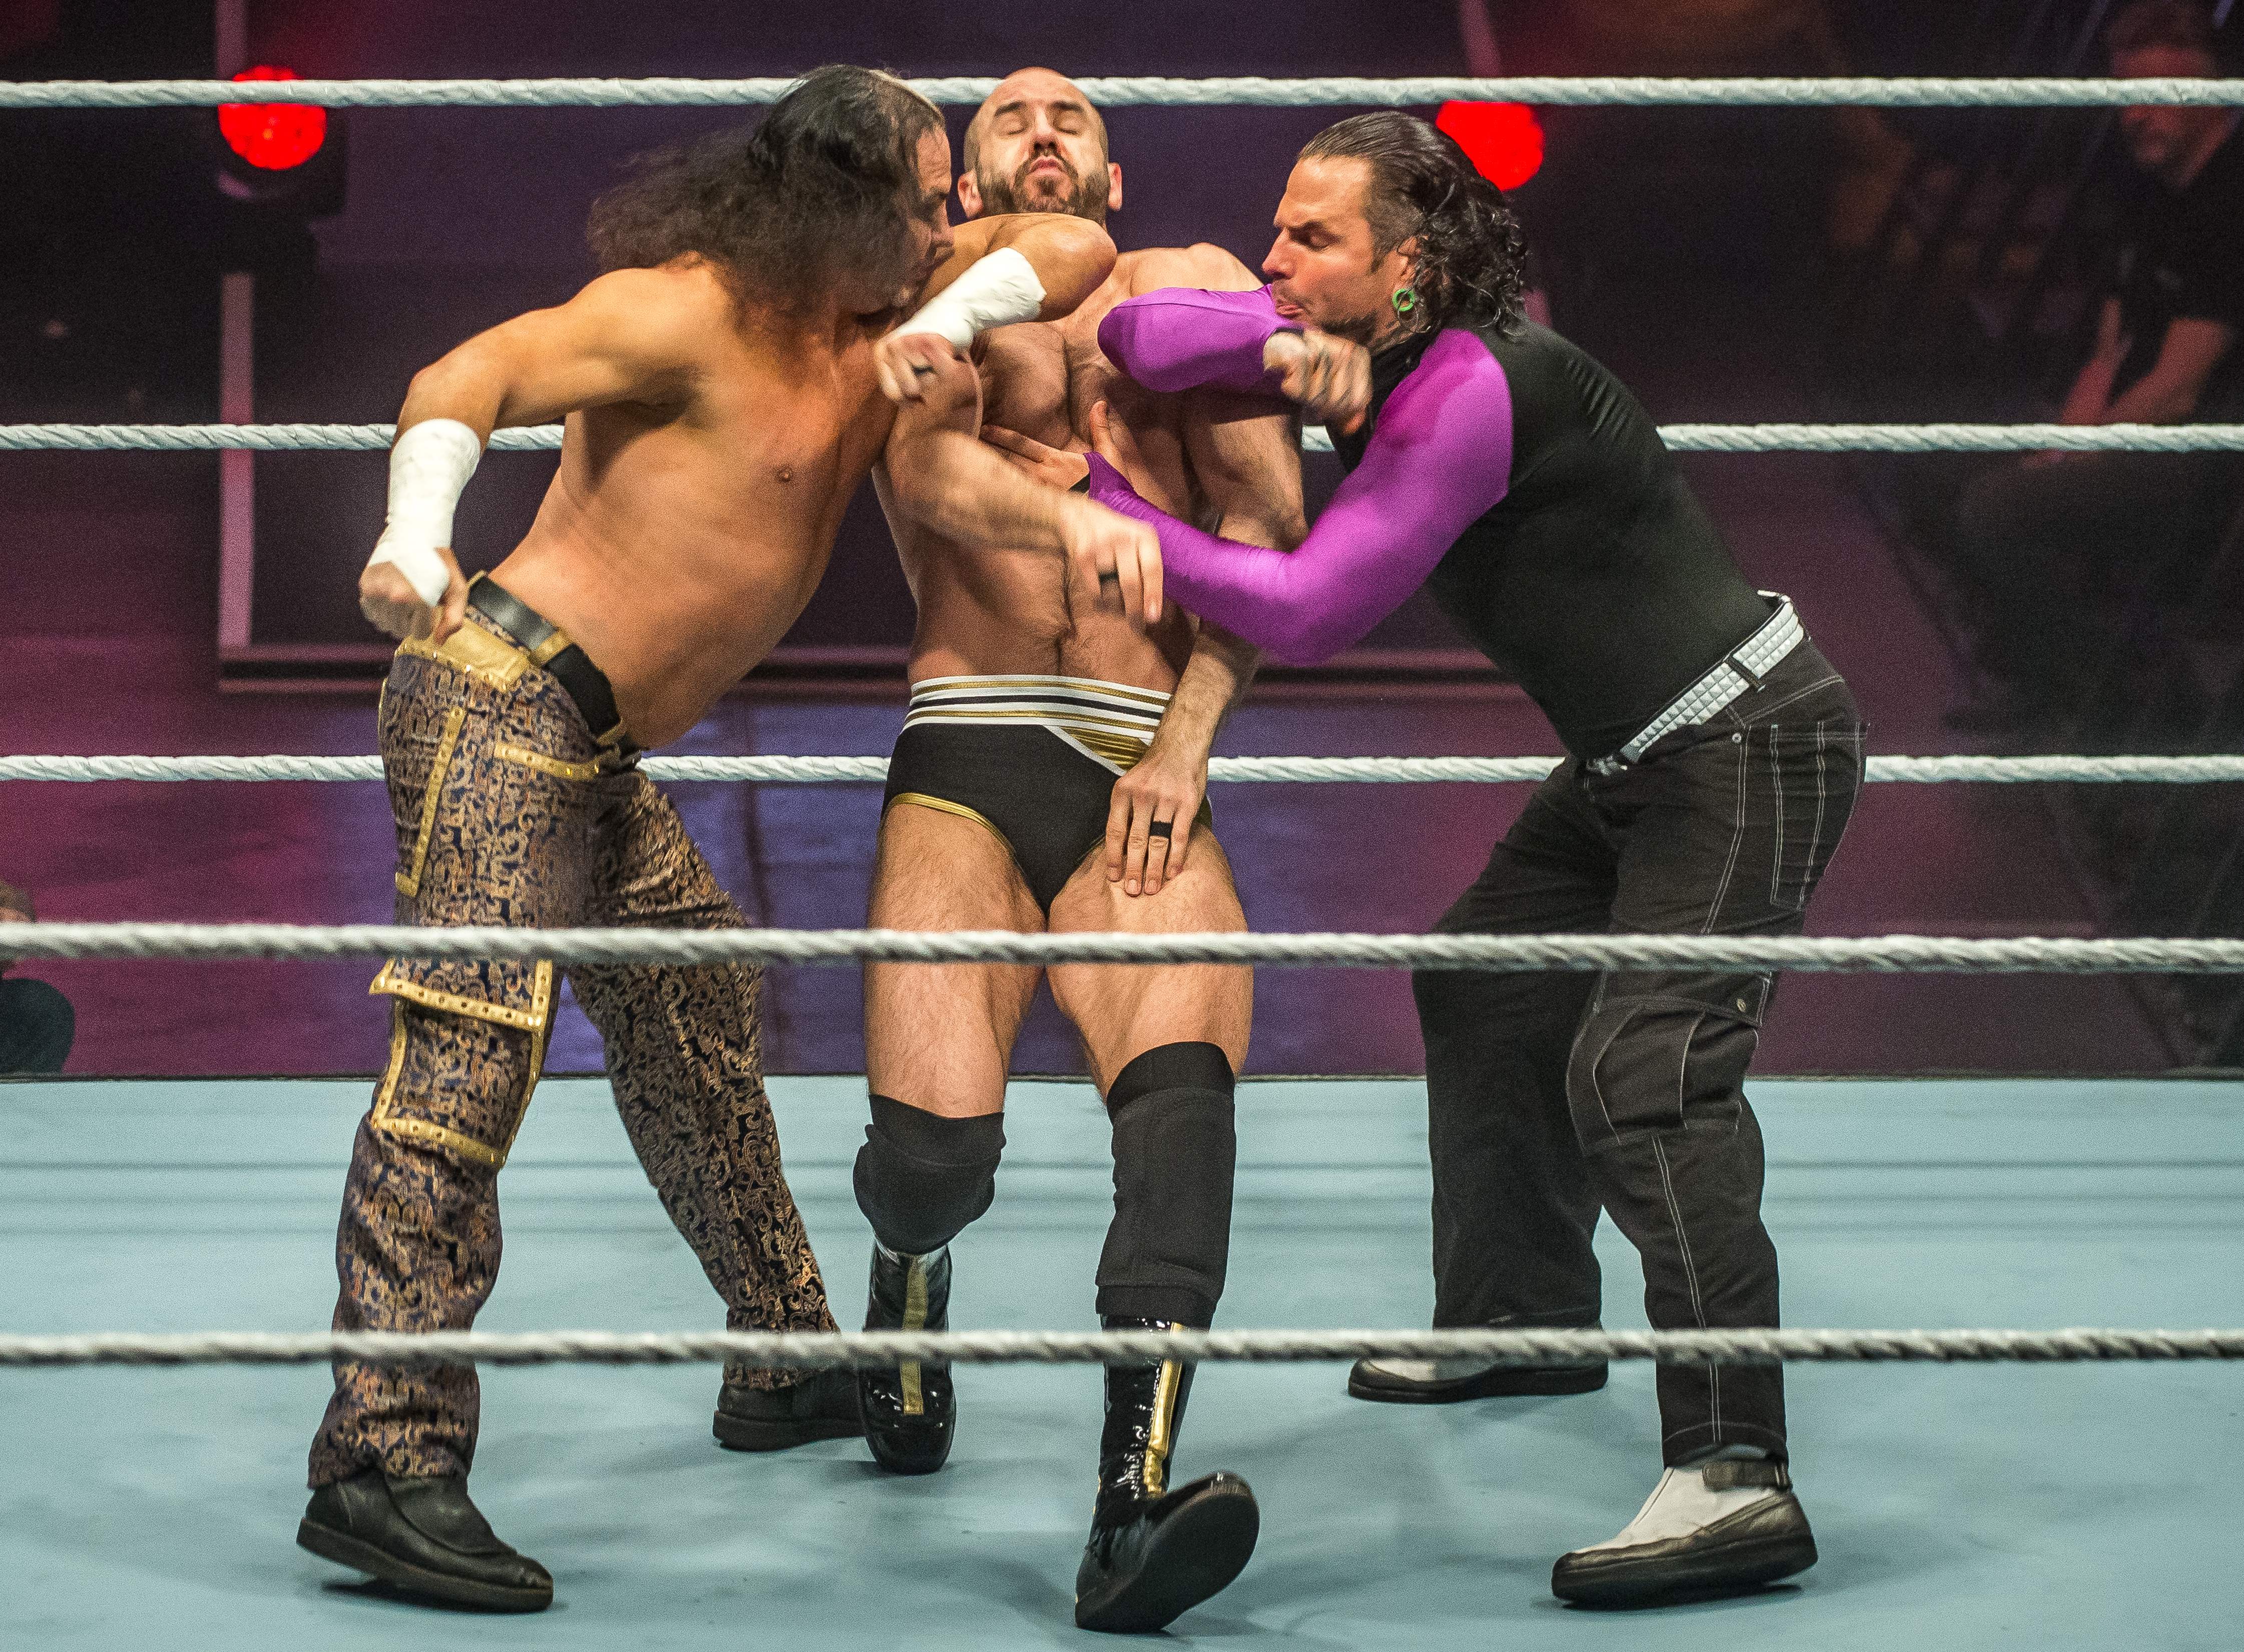 The Hardy Boyz vs The Bar